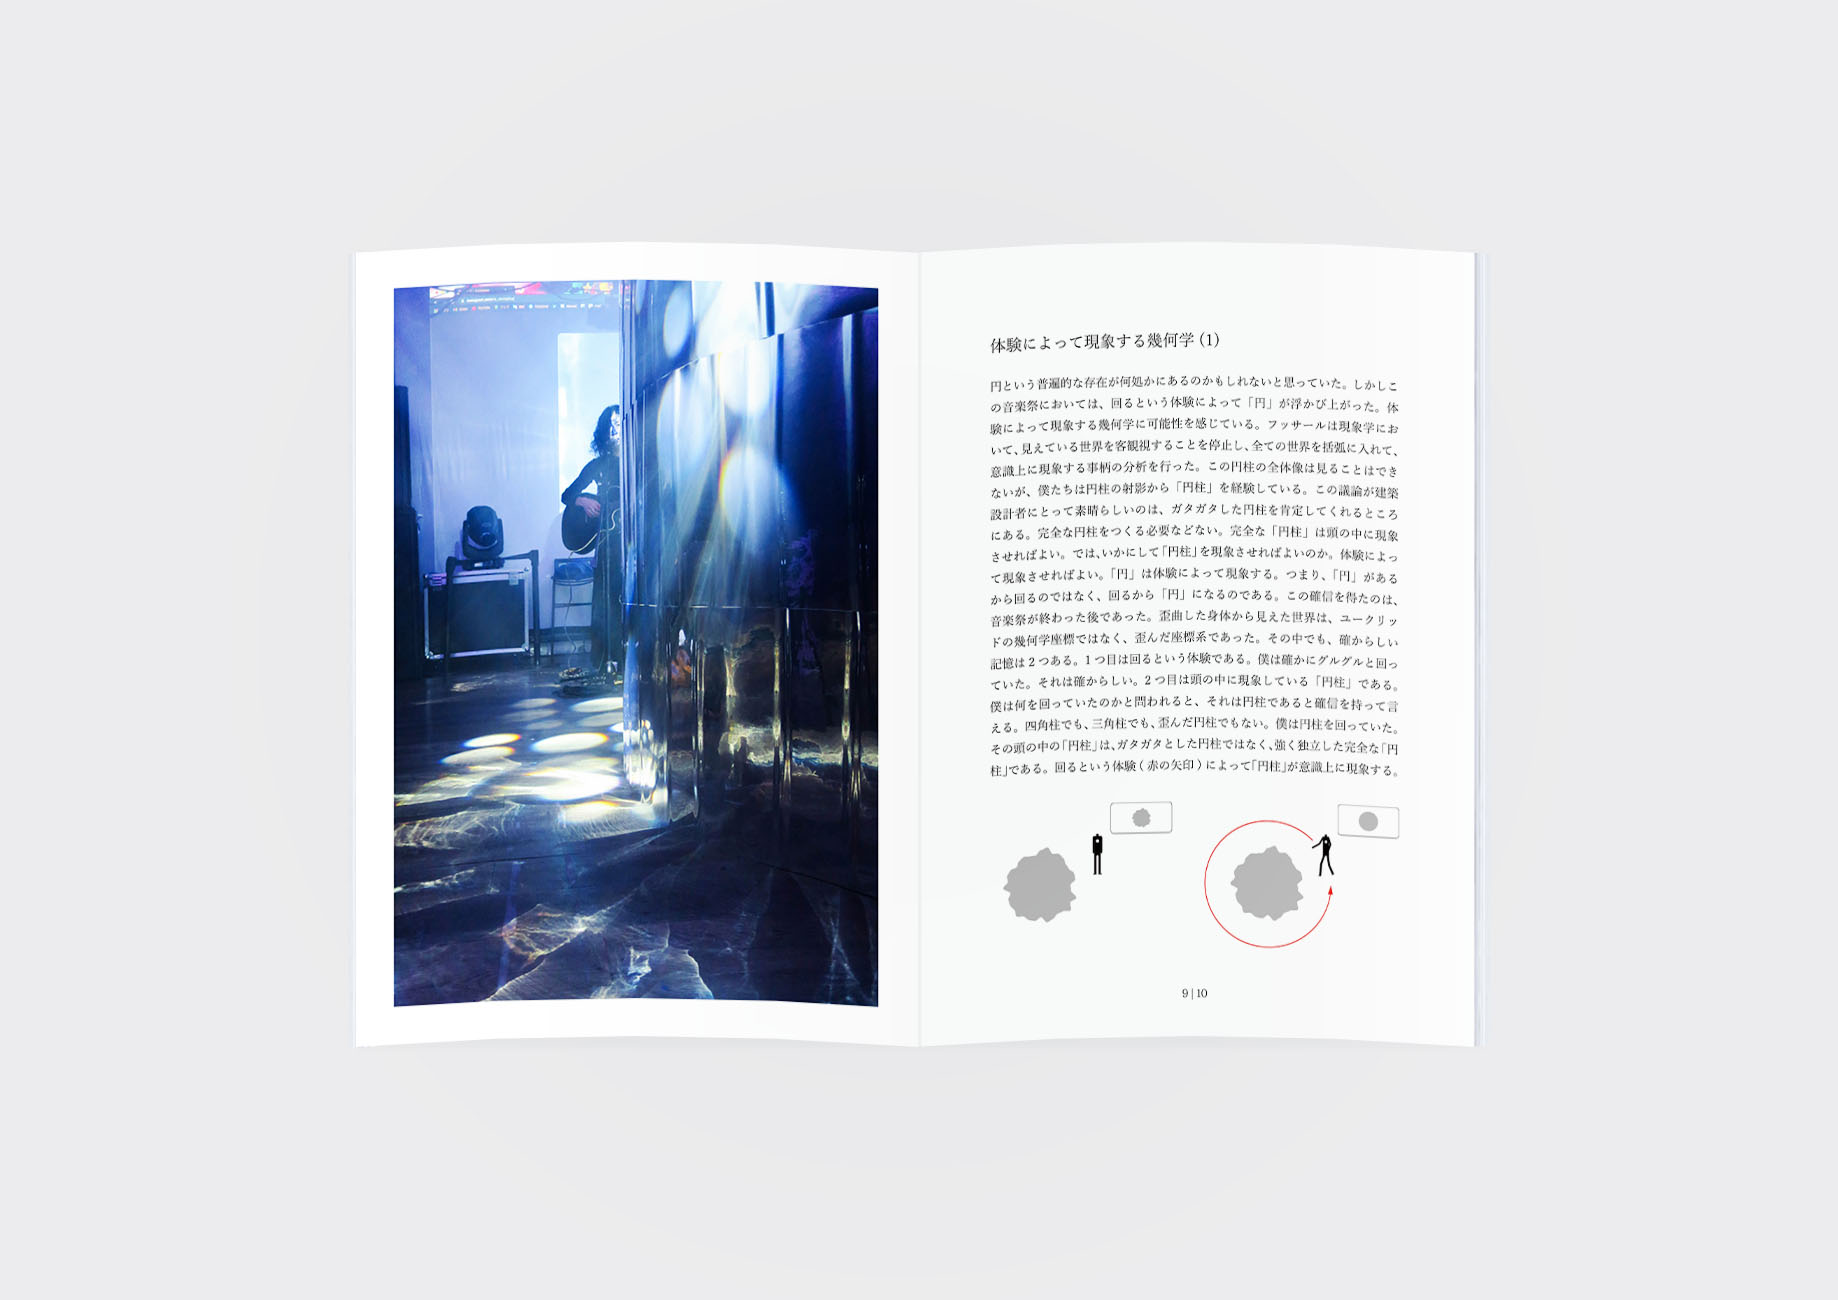 utautaという本が開かれている画像